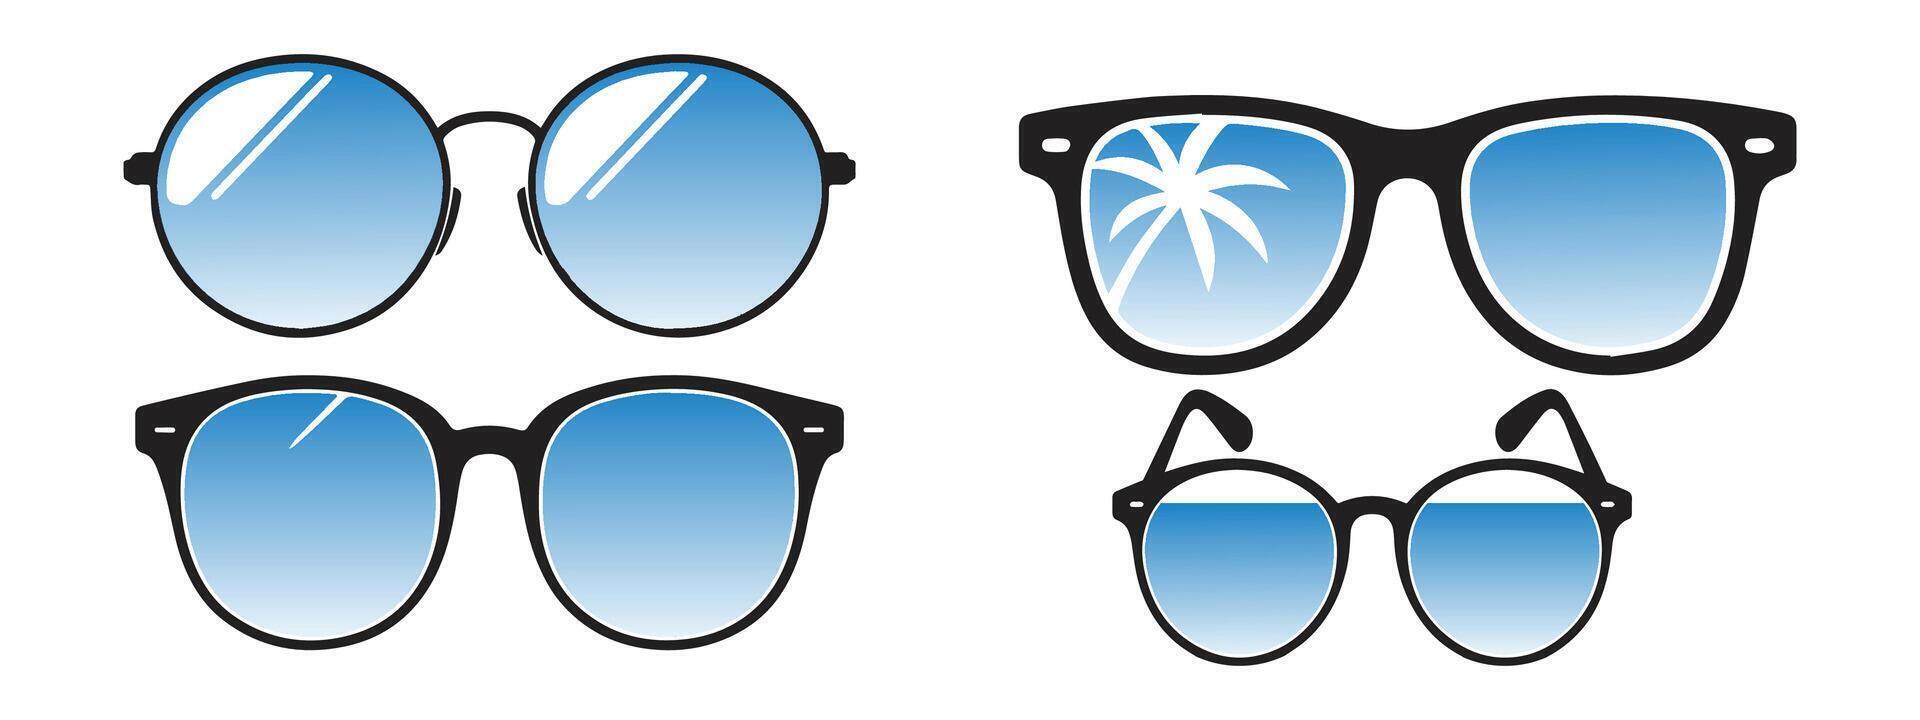 black sunglasses set. Sunglasses icon vector illustration. Black sunglass, men's glasses silhouette